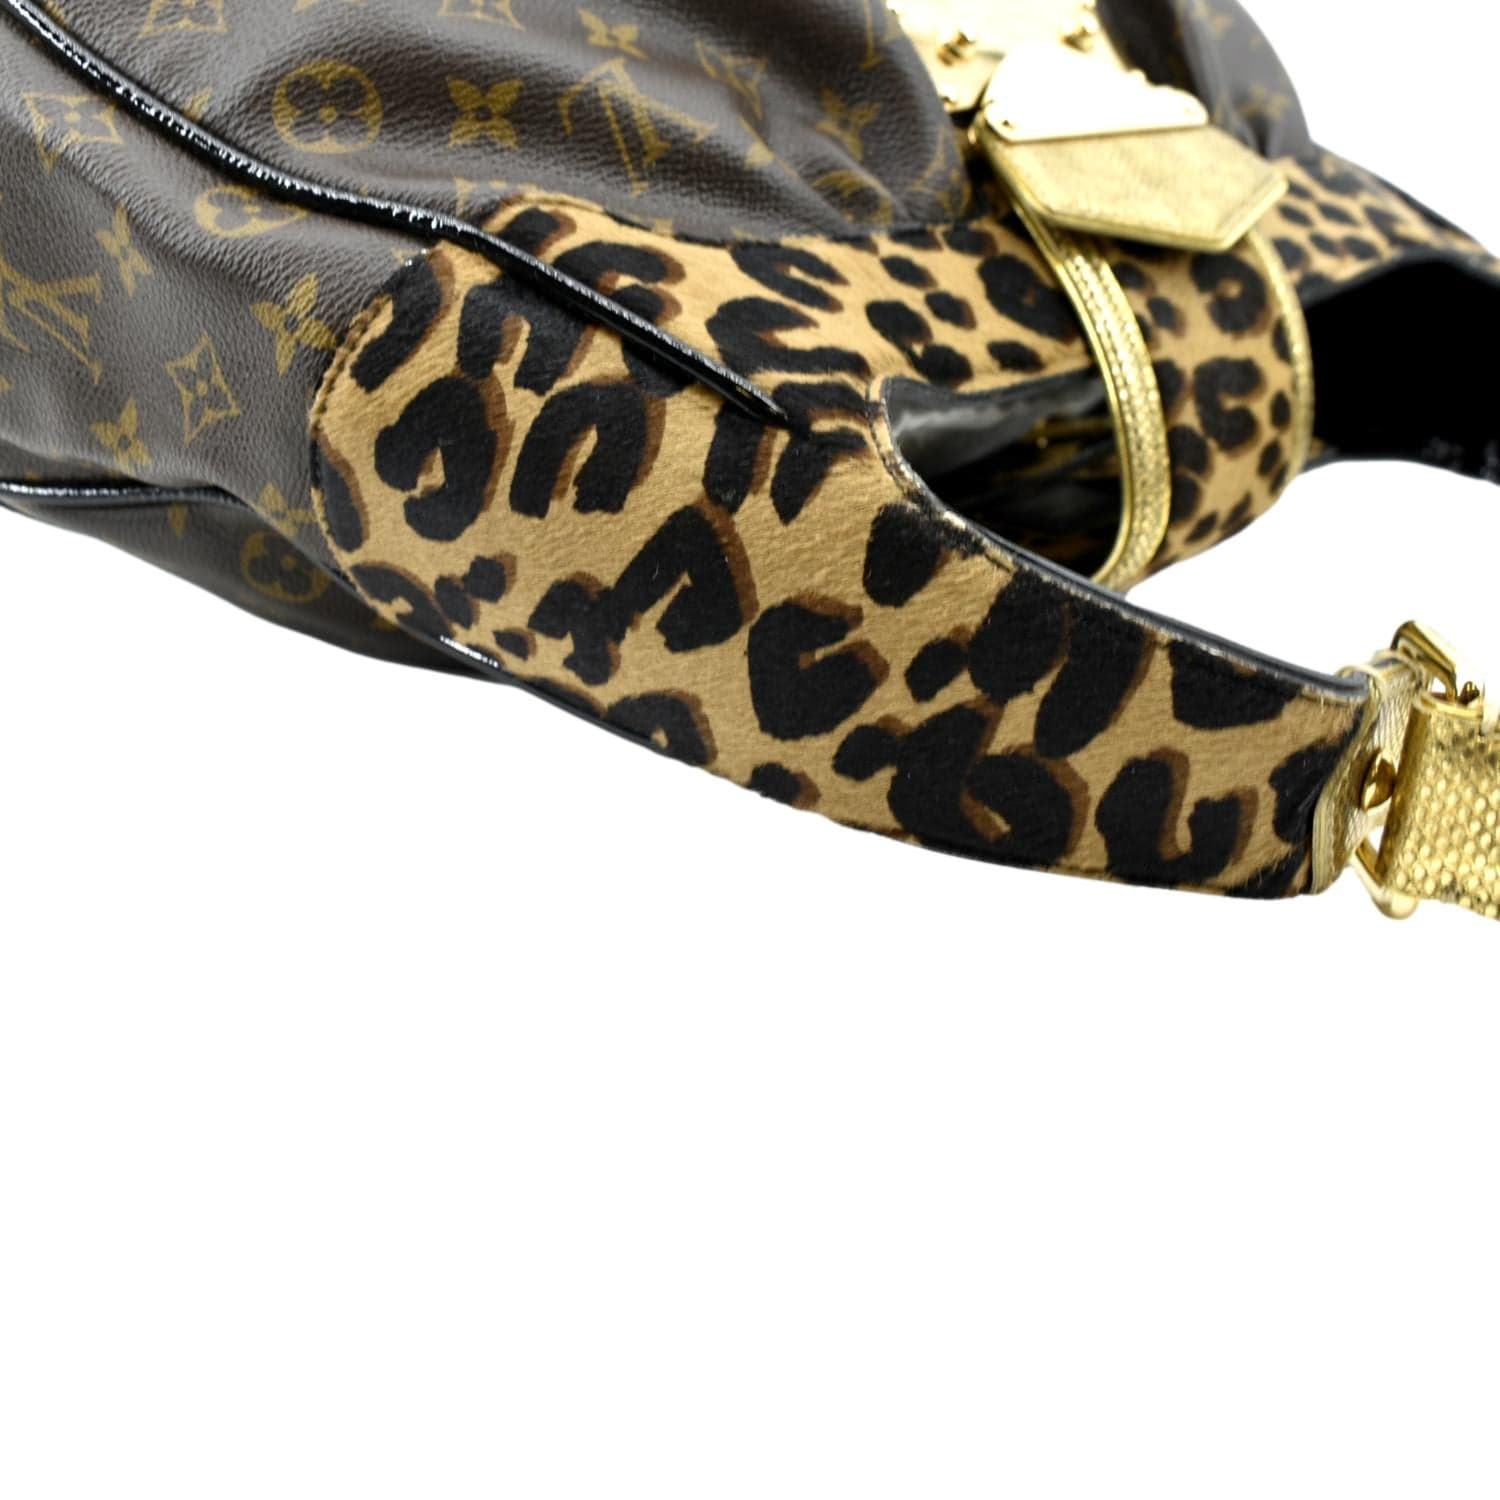 Louis Vuitton, Bags, Limited Edition Vintage Louis Vuitton Polly Monogram  Leopard Hobo Bag